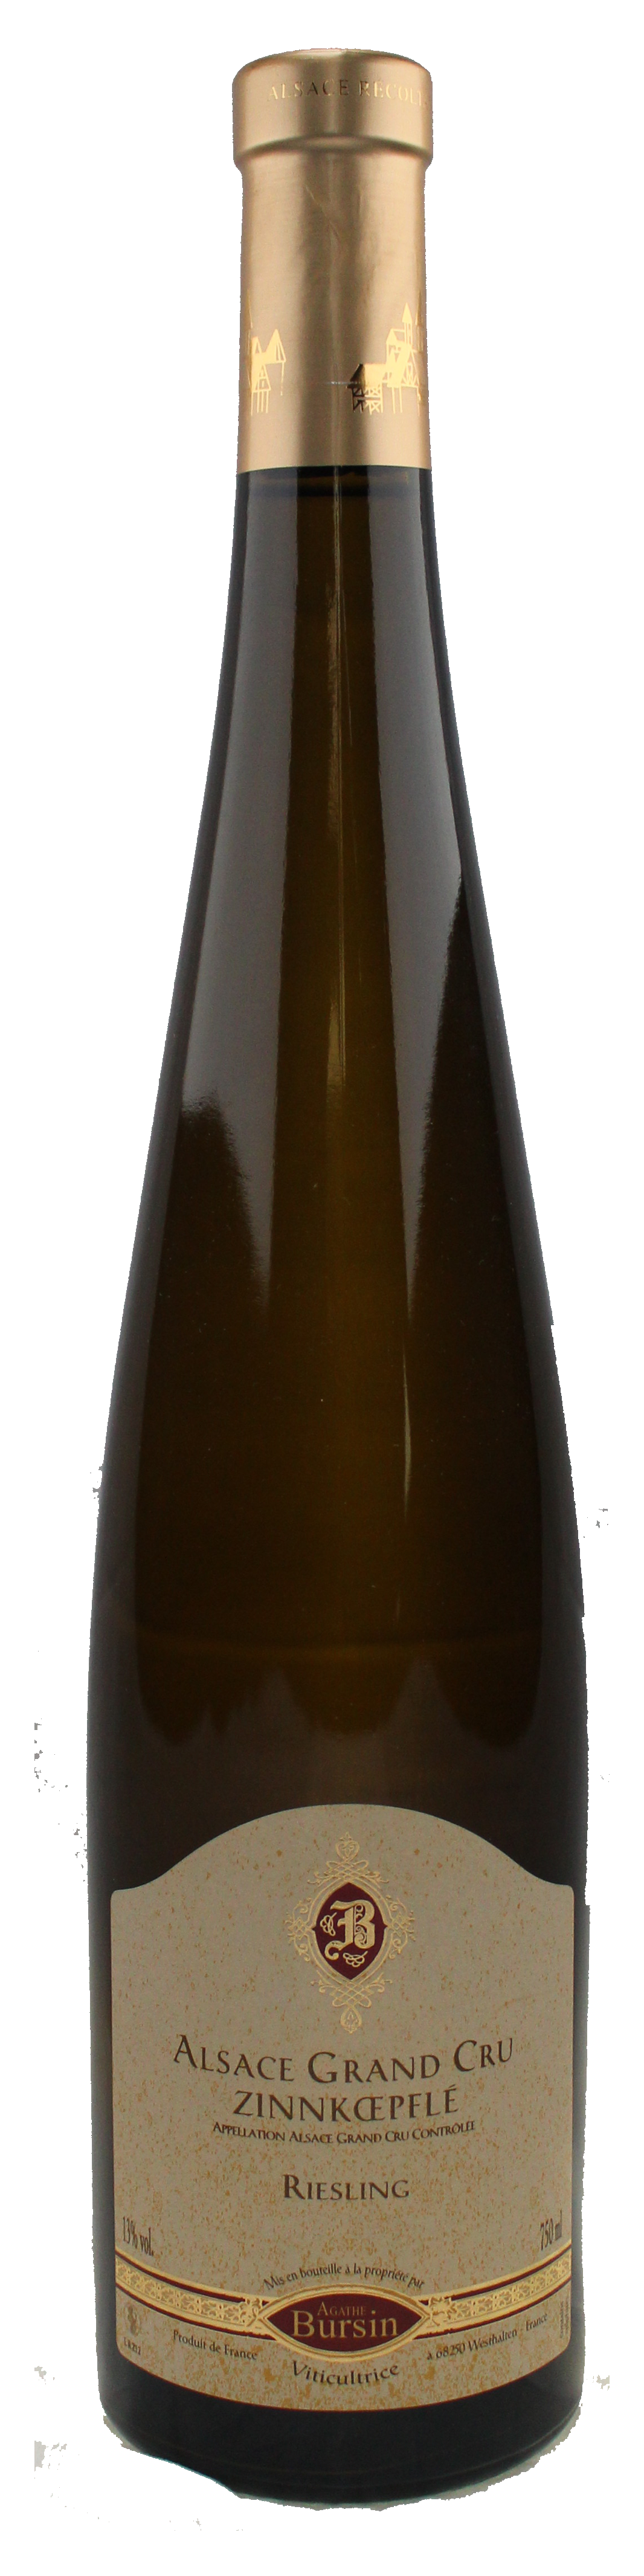 Bottle shot of 2013 Riesling Grand Cru Zinnkoepfle